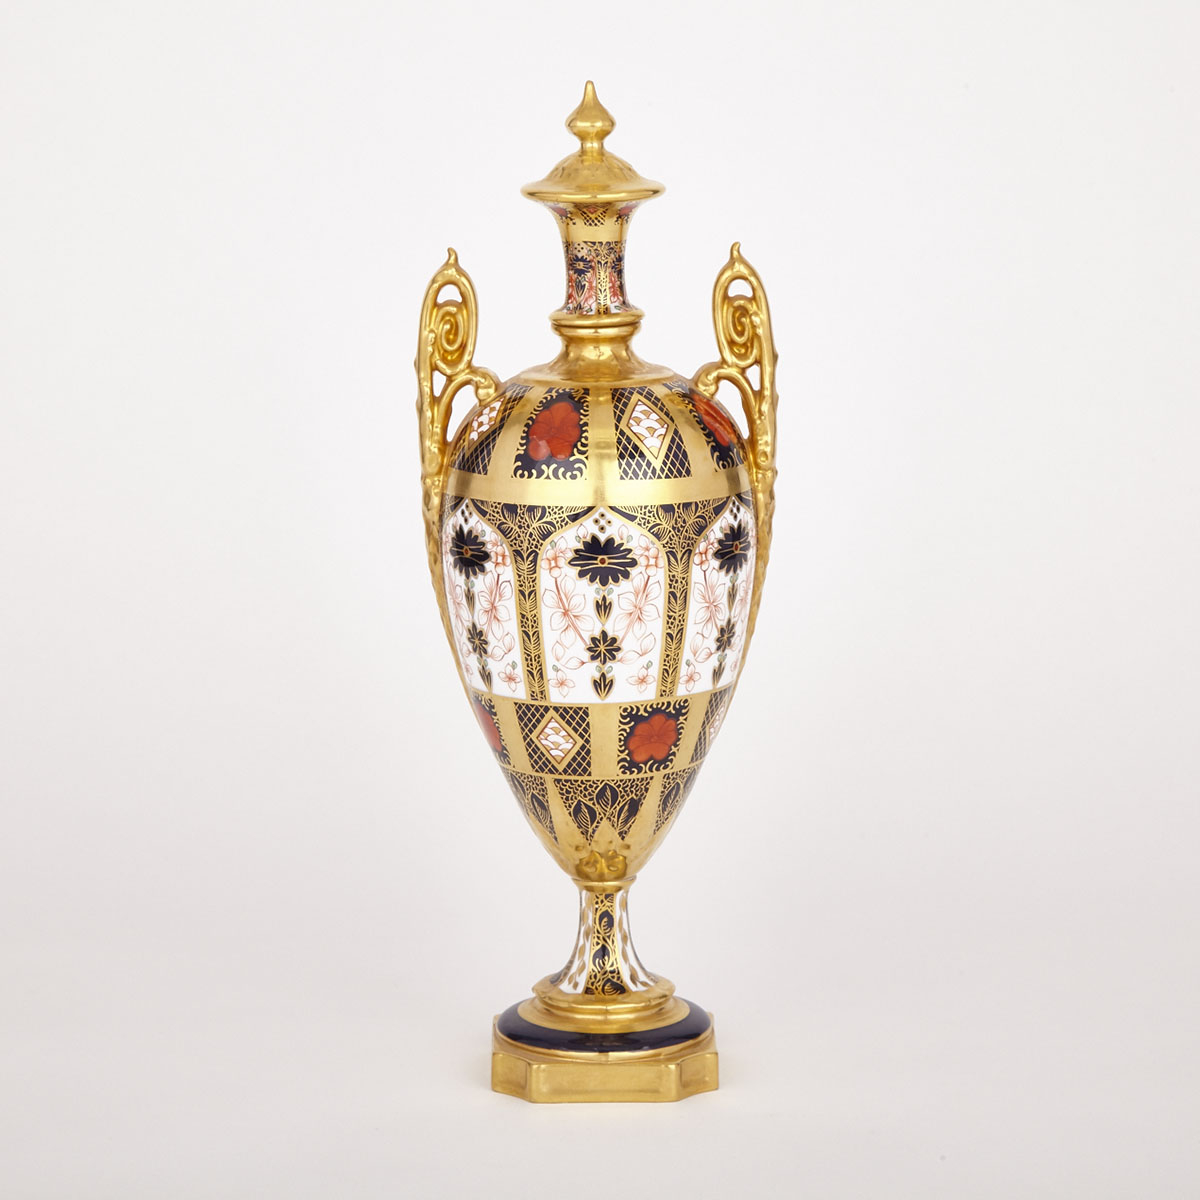 Royal Crown Derby ‘Old Imari’ (1128) Pattern Two-Handled Mantel Urn, c.1975